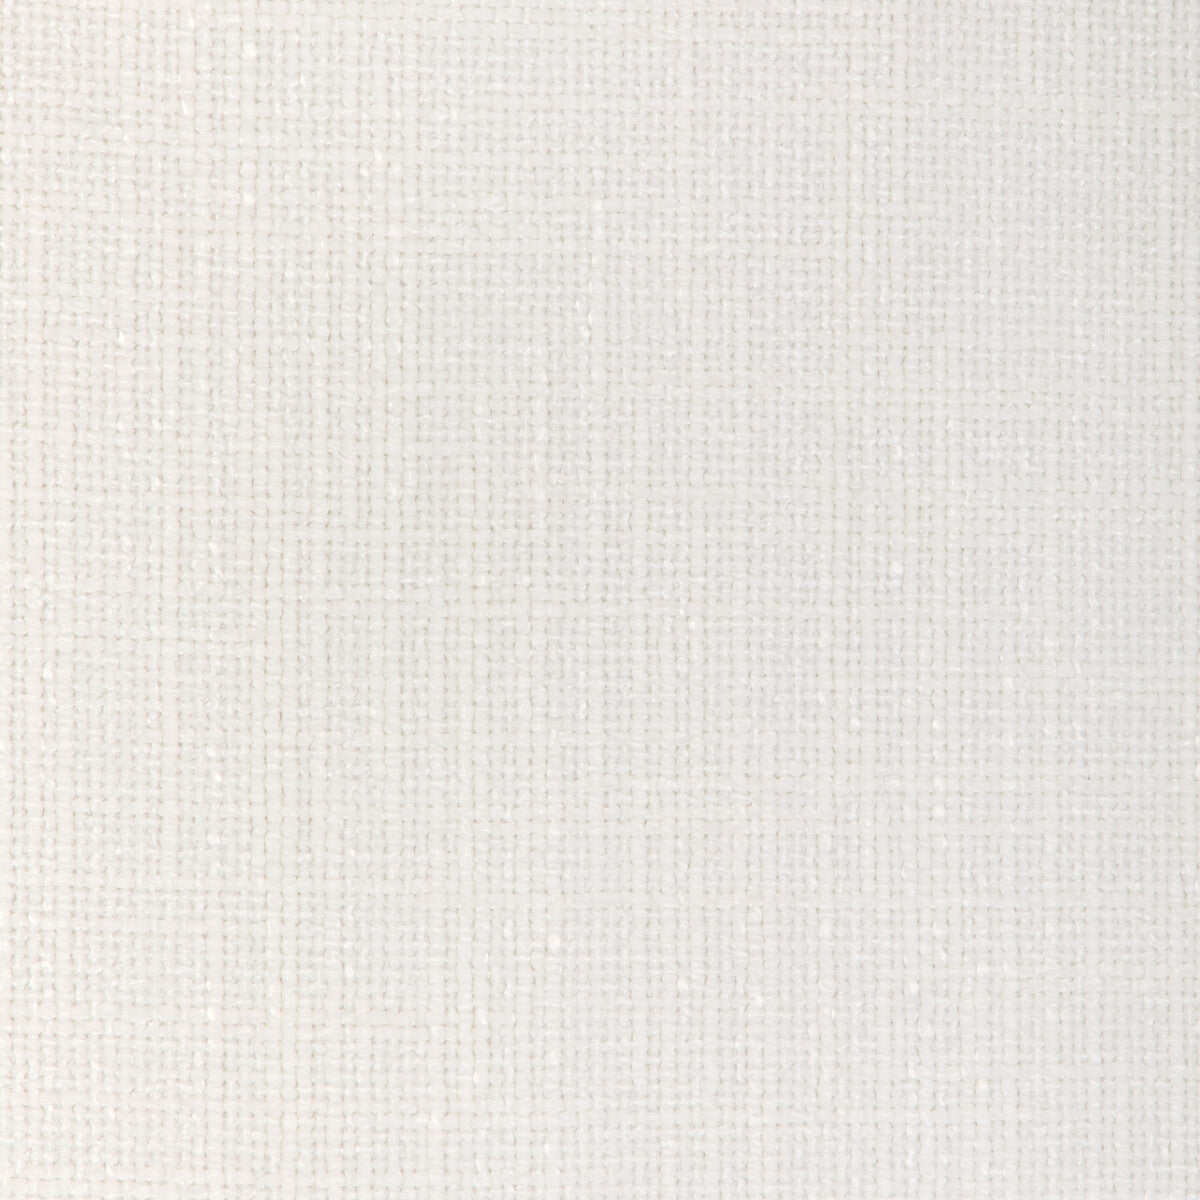 Kravet Smart fabric in 36677-101 color - pattern 36677.101.0 - by Kravet Smart in the Performance Kravetarmor collection